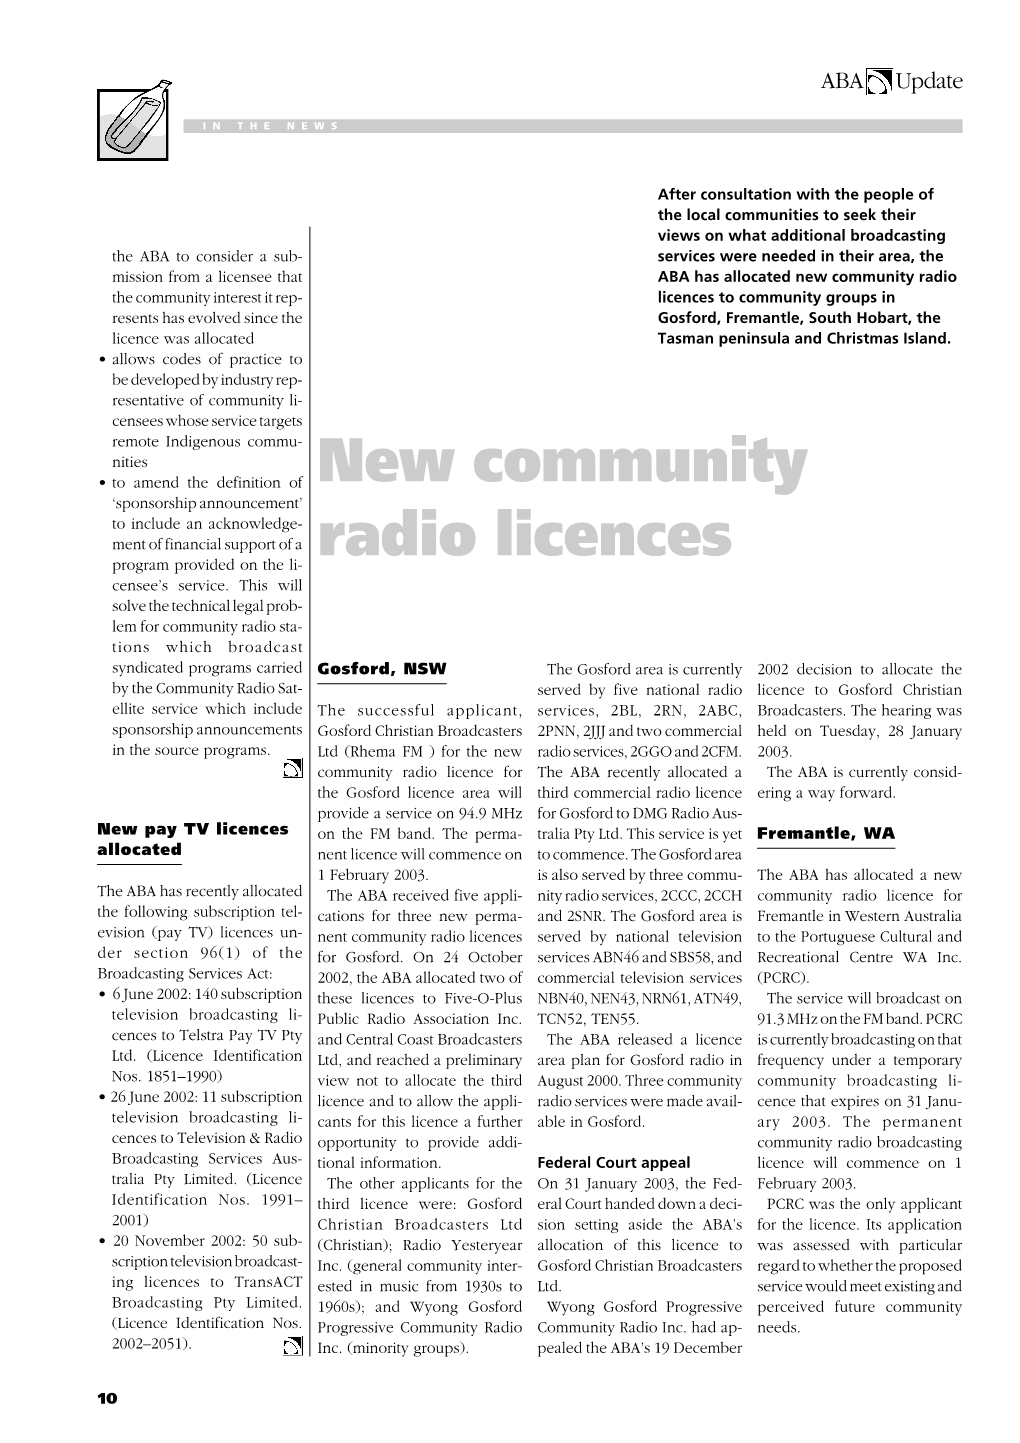 New Community Radio Licences